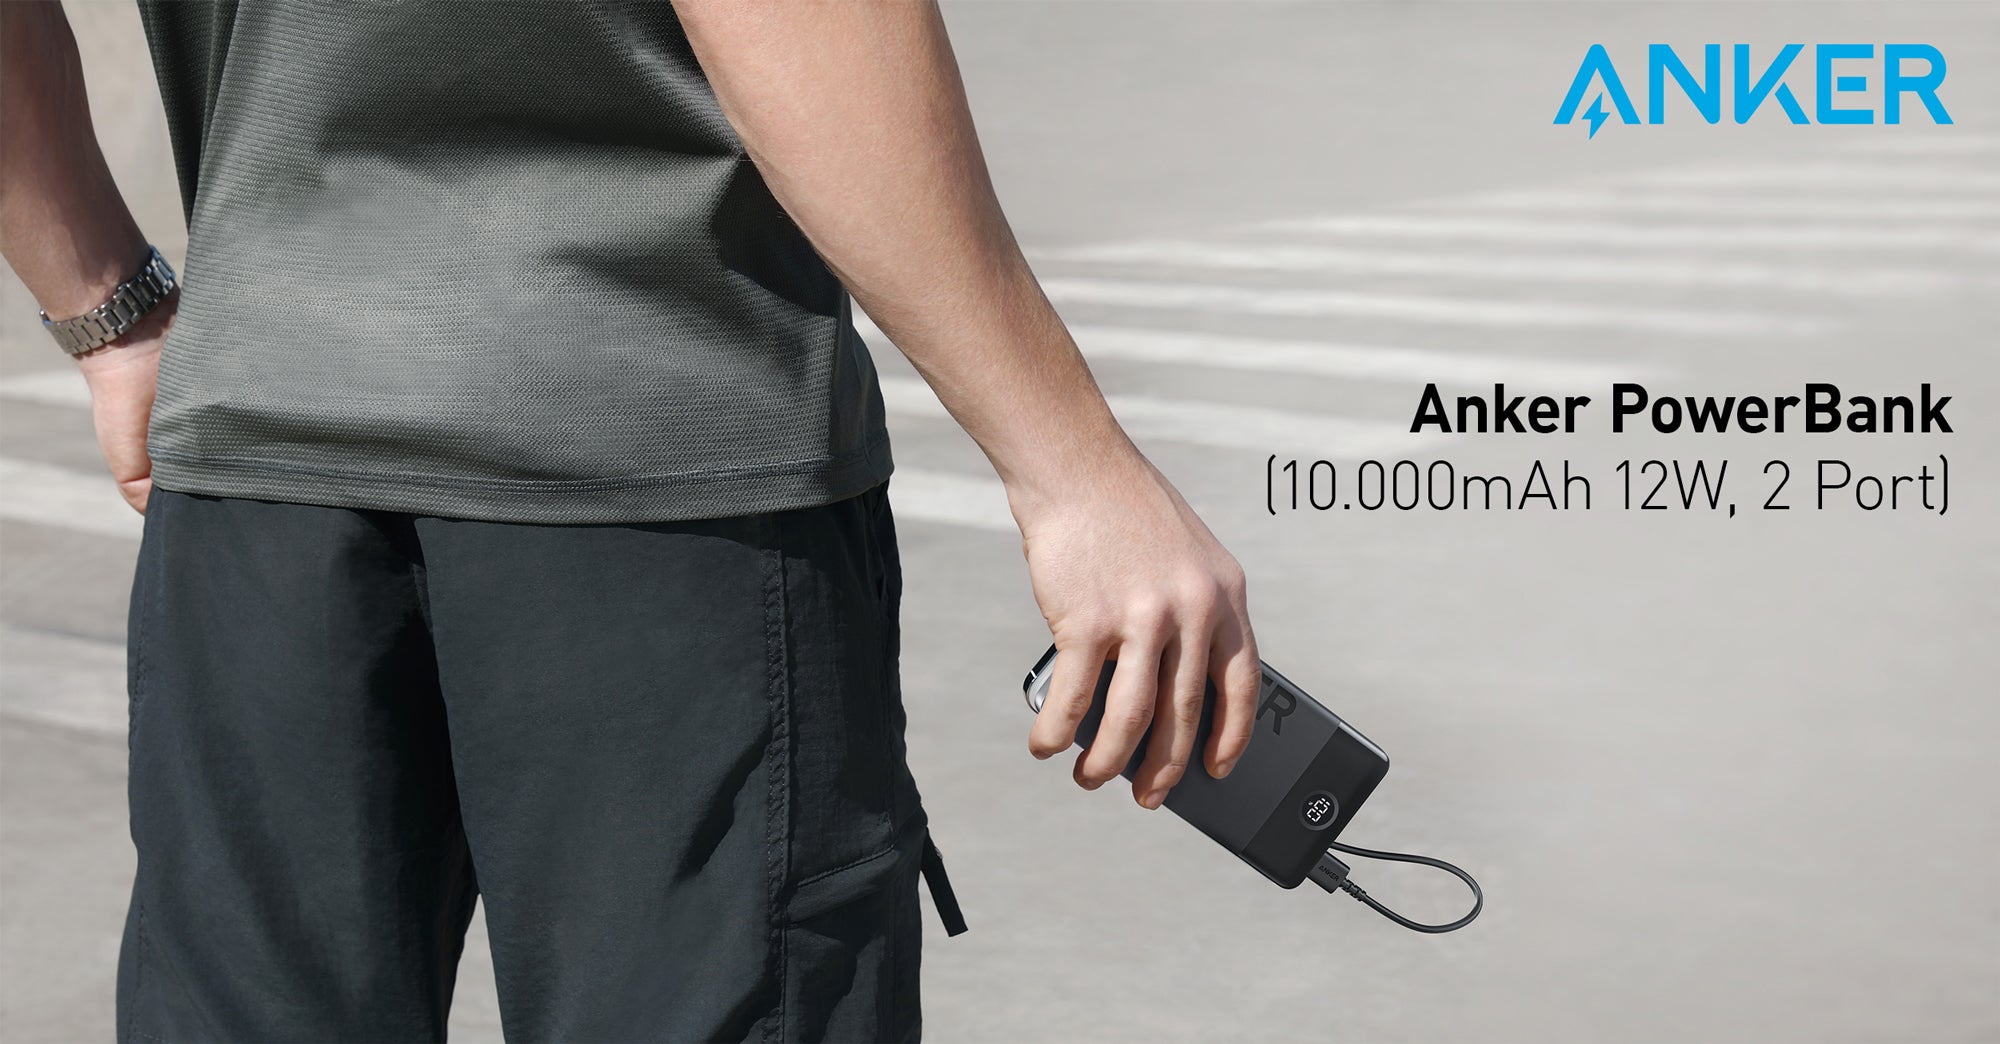 Anker 324 PowerBank (10,000mAh 12W, 2 Ports)